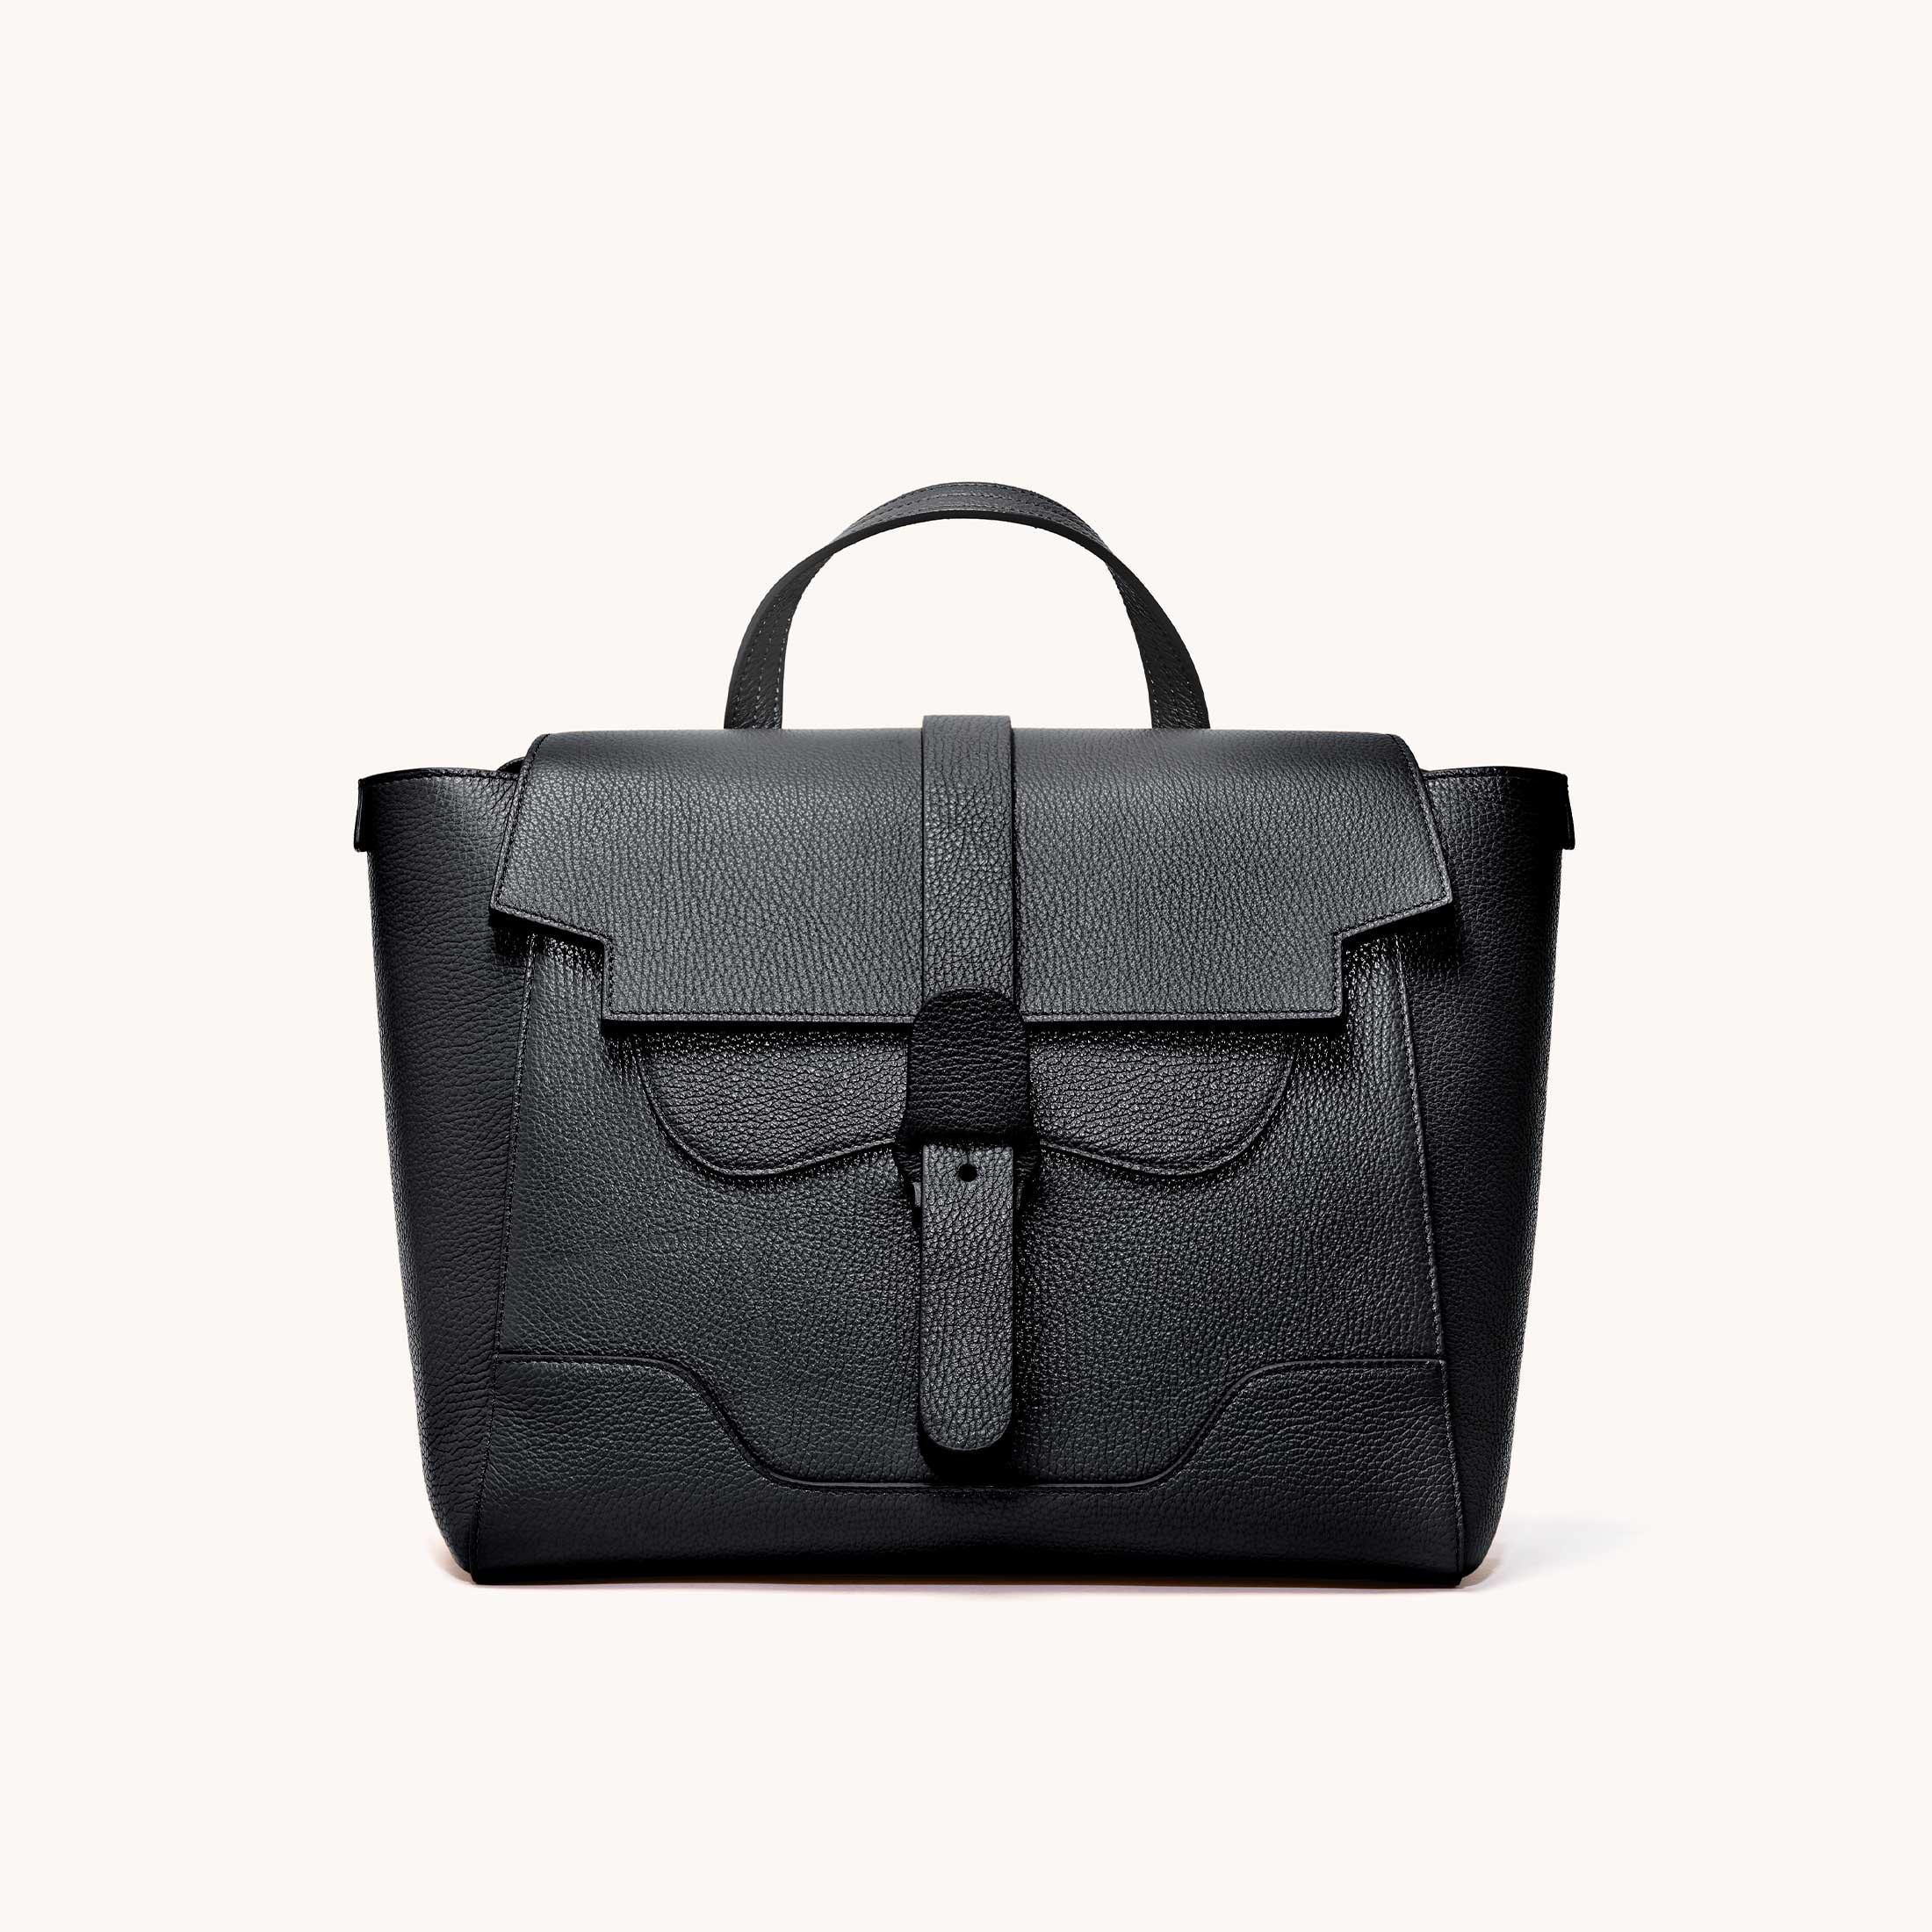 FIVE DESIGNER WORK BAGS  PRADA , LOEWE, LV, SENREVE, CELINE #luxurybag # workbags #designerworkbag 